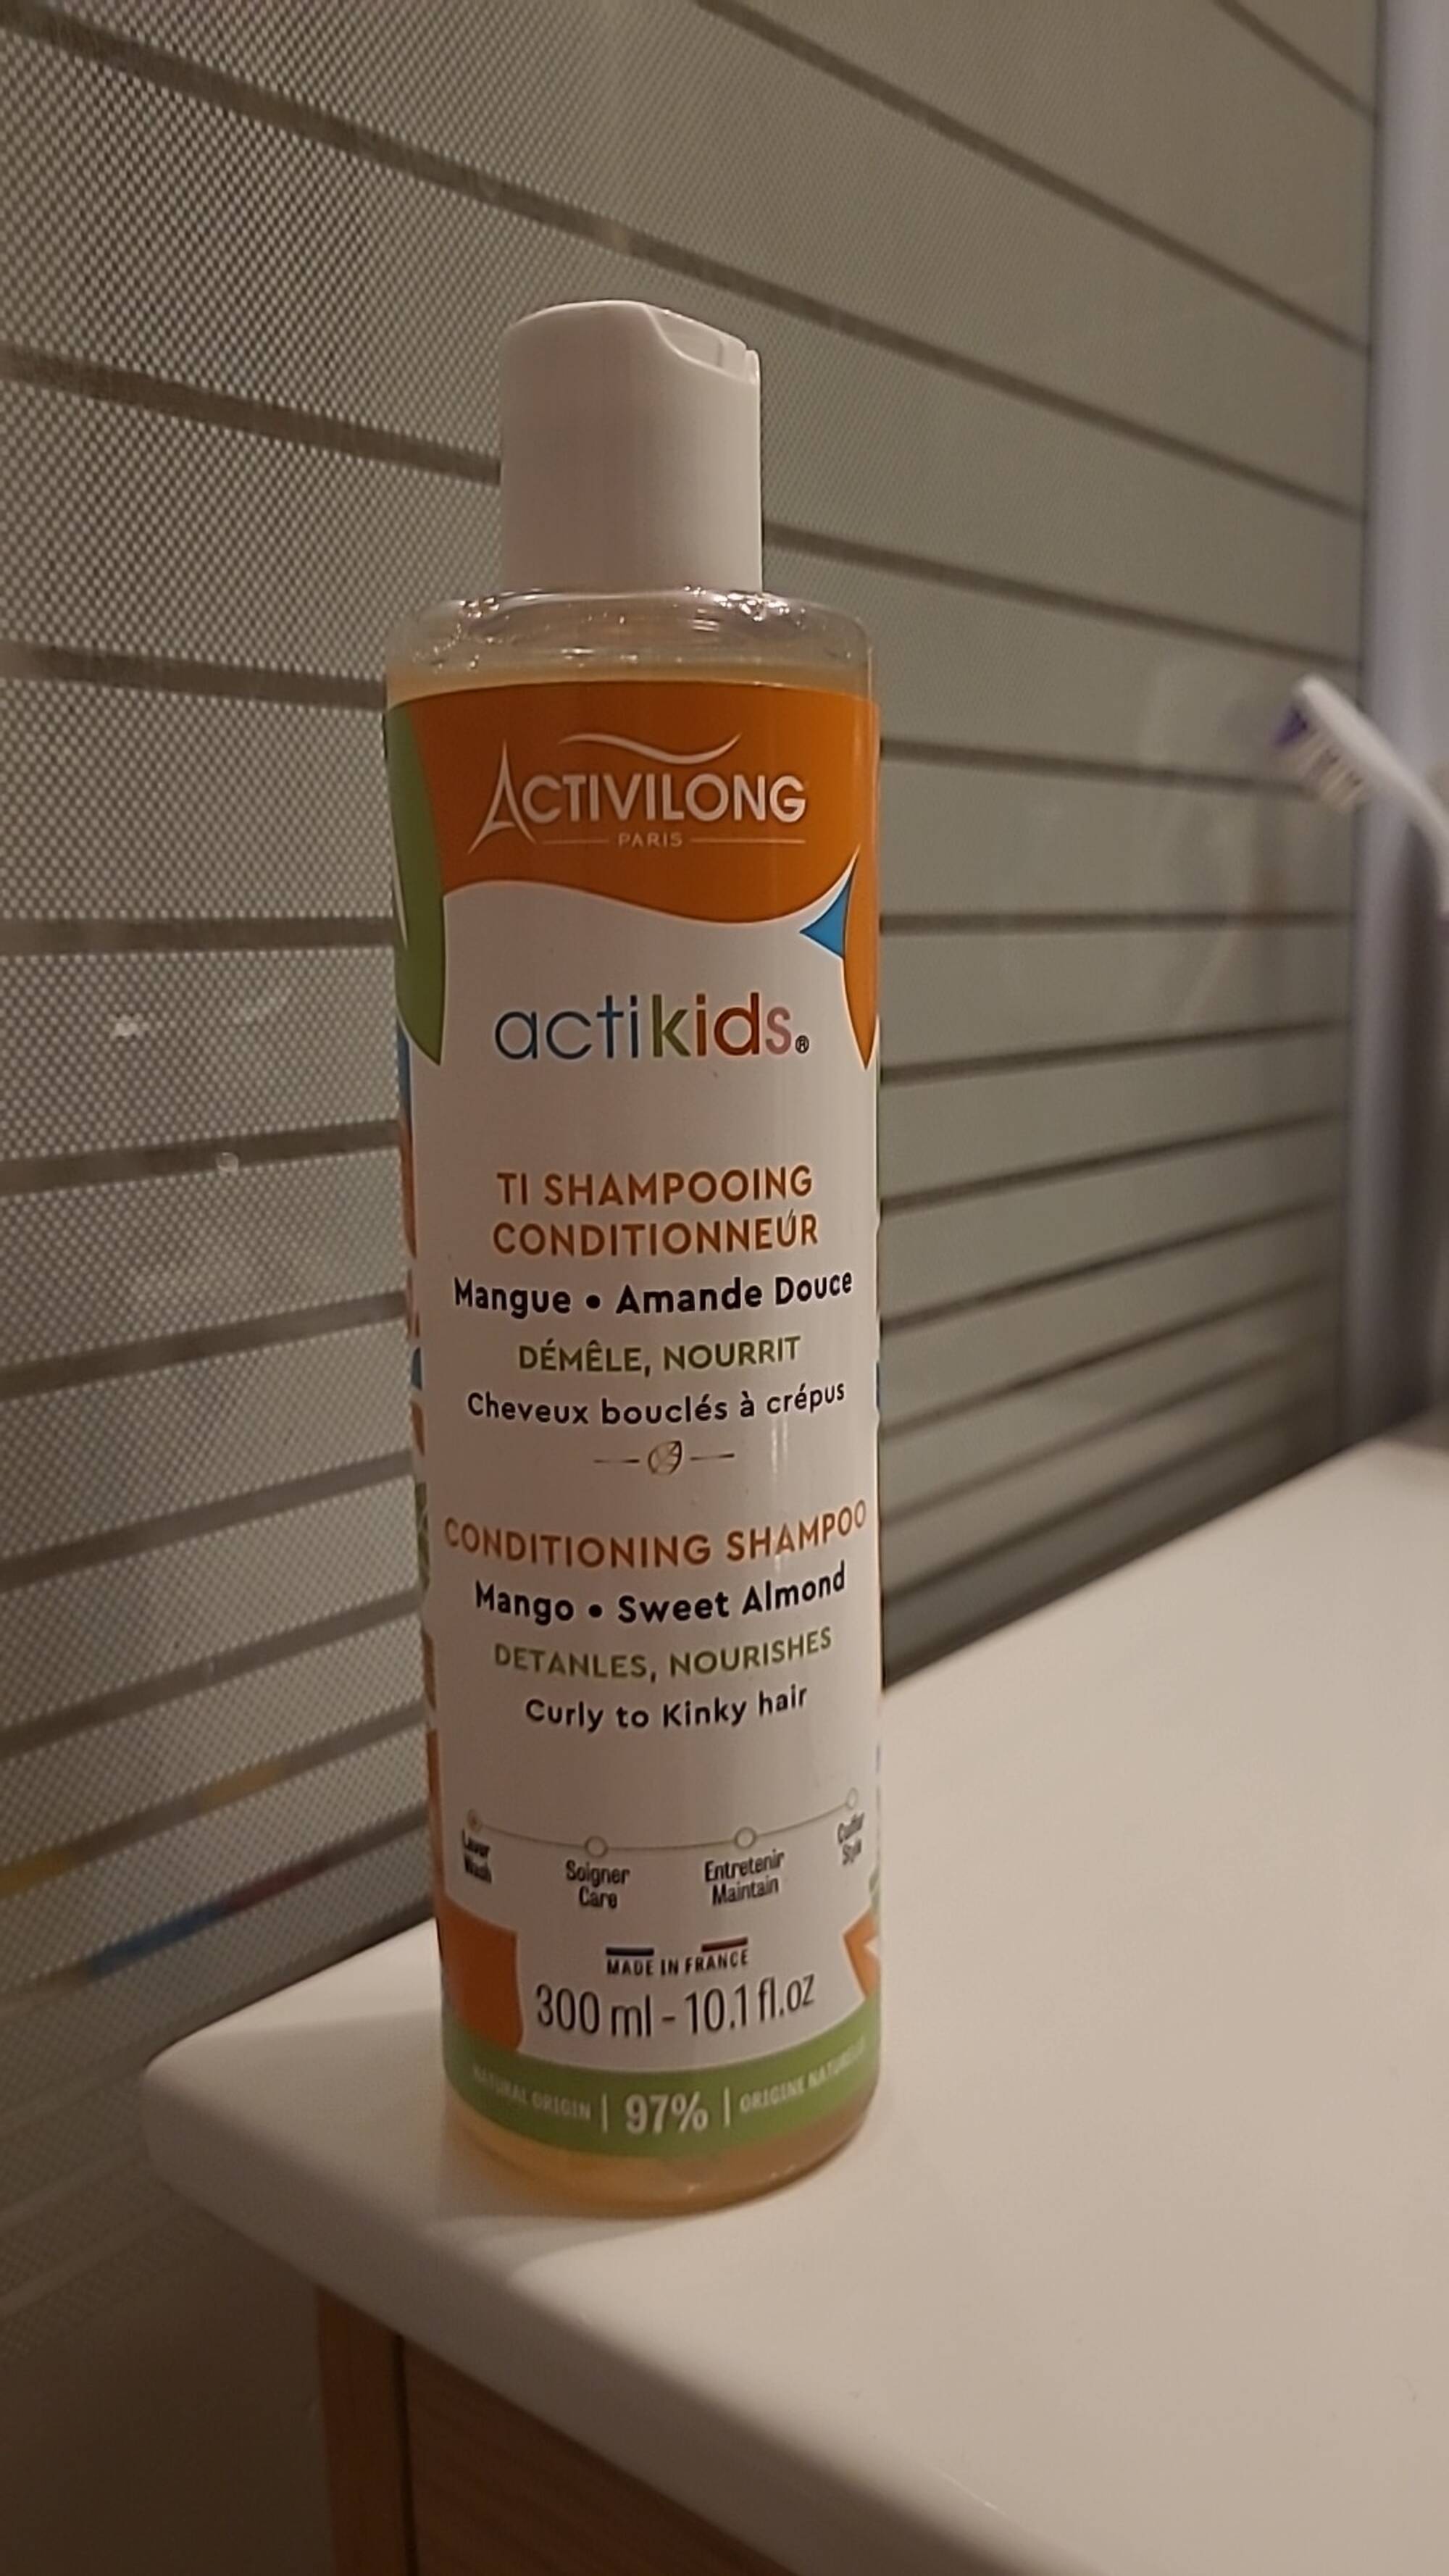 ACTIVILONG - Actikids - Ti shampooing conditionneur